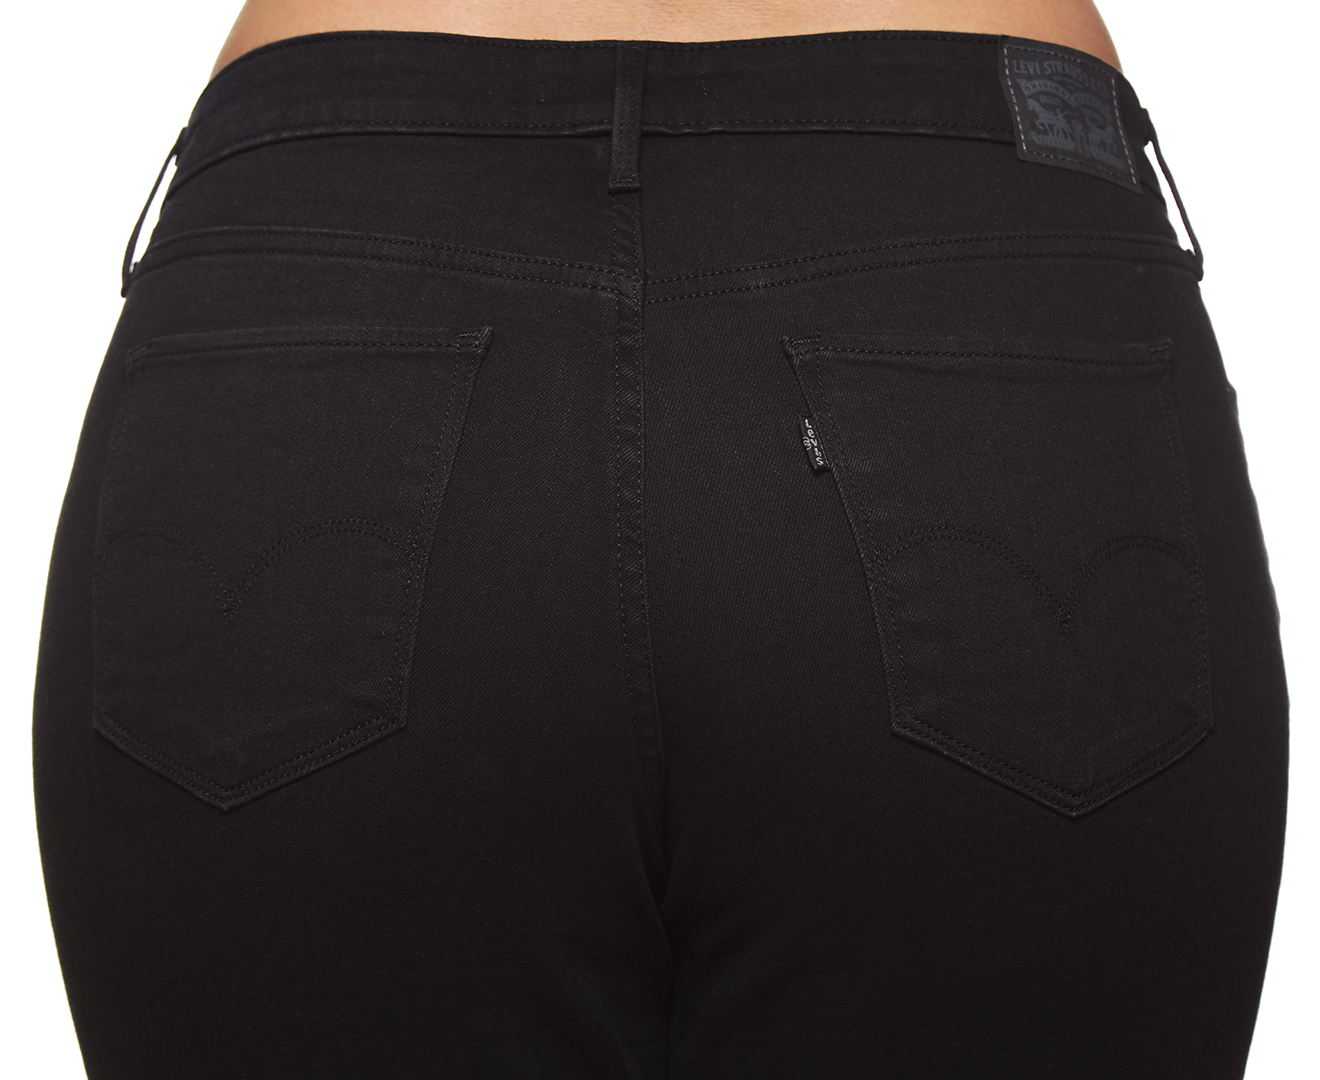 Levi's Women's Plus Size 311 Shaping Skinny Jeans - Soft Black | Catch ...